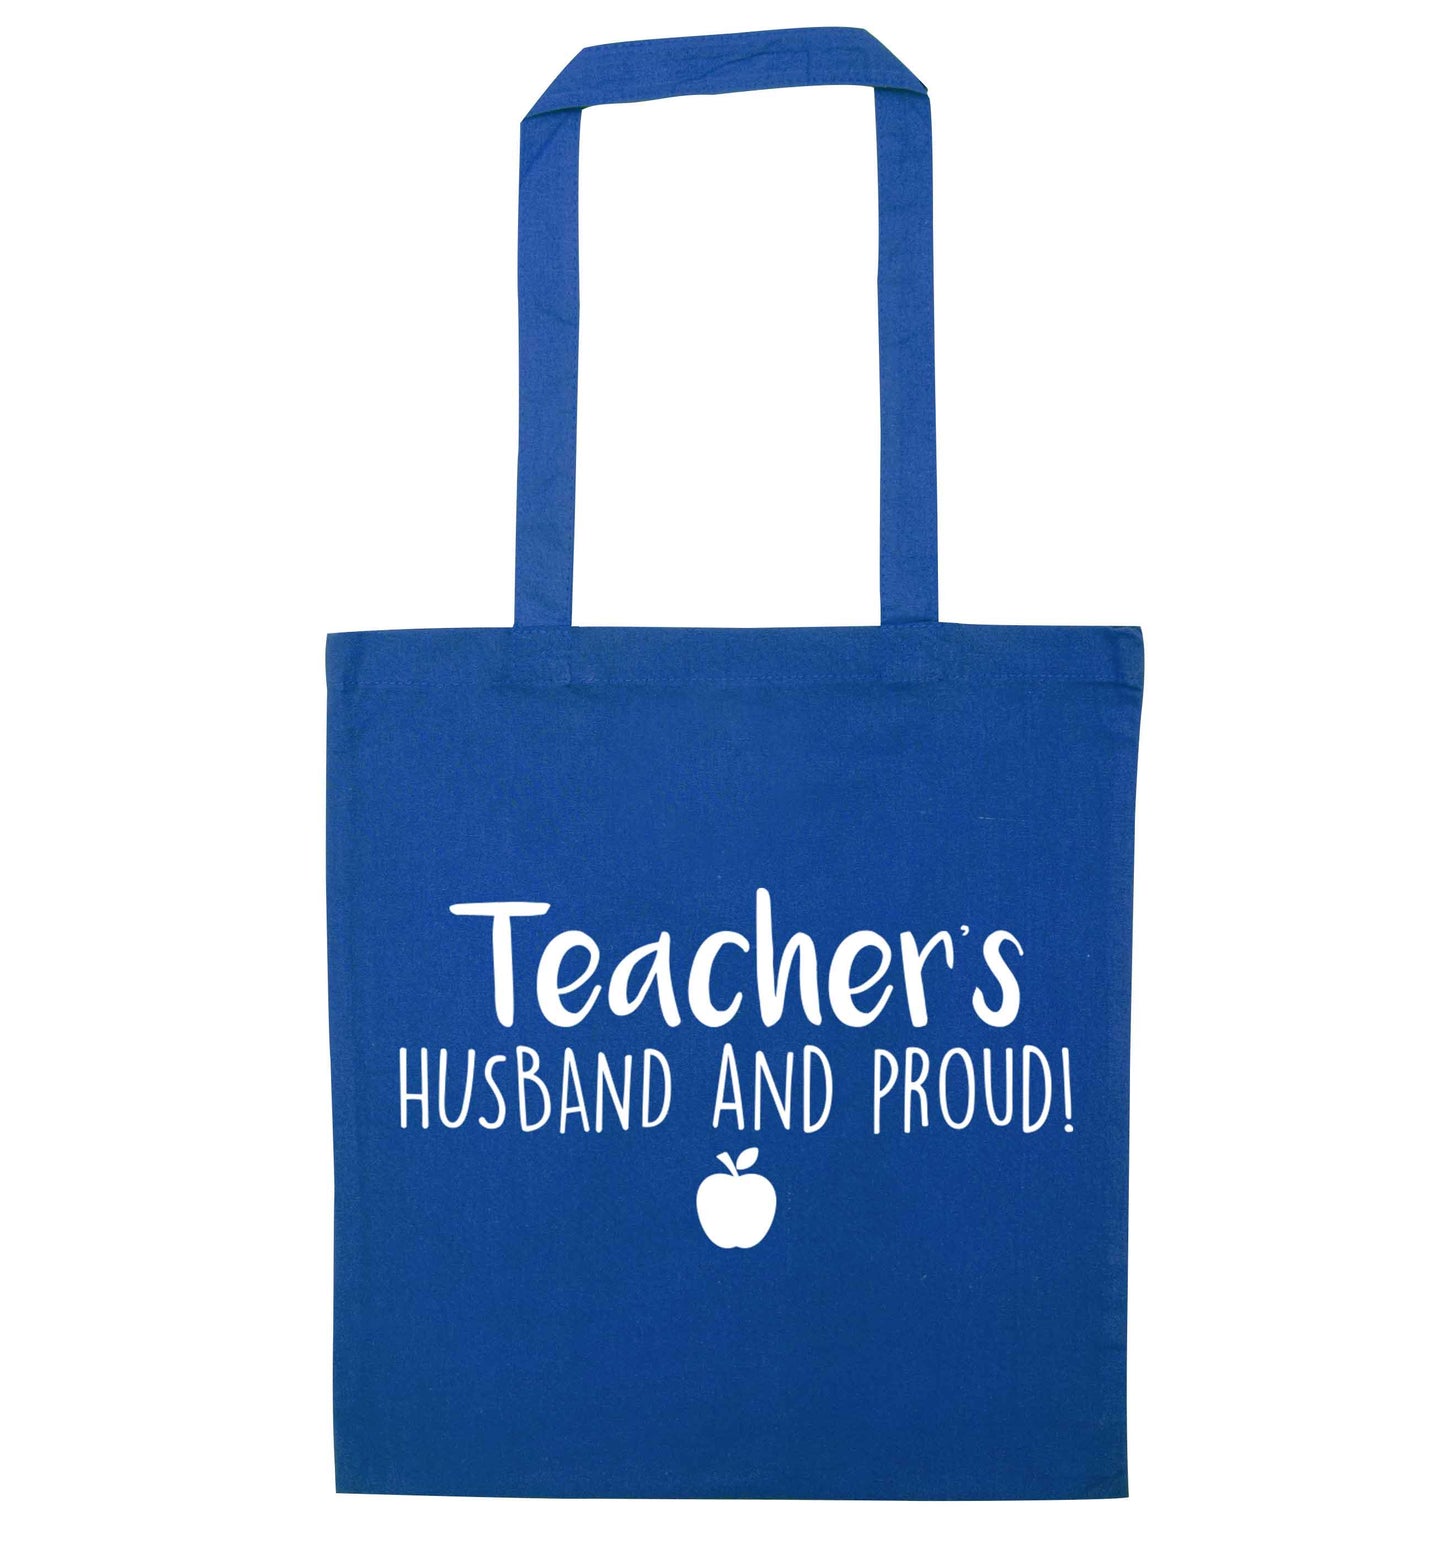 Teachers husband and proud blue tote bag